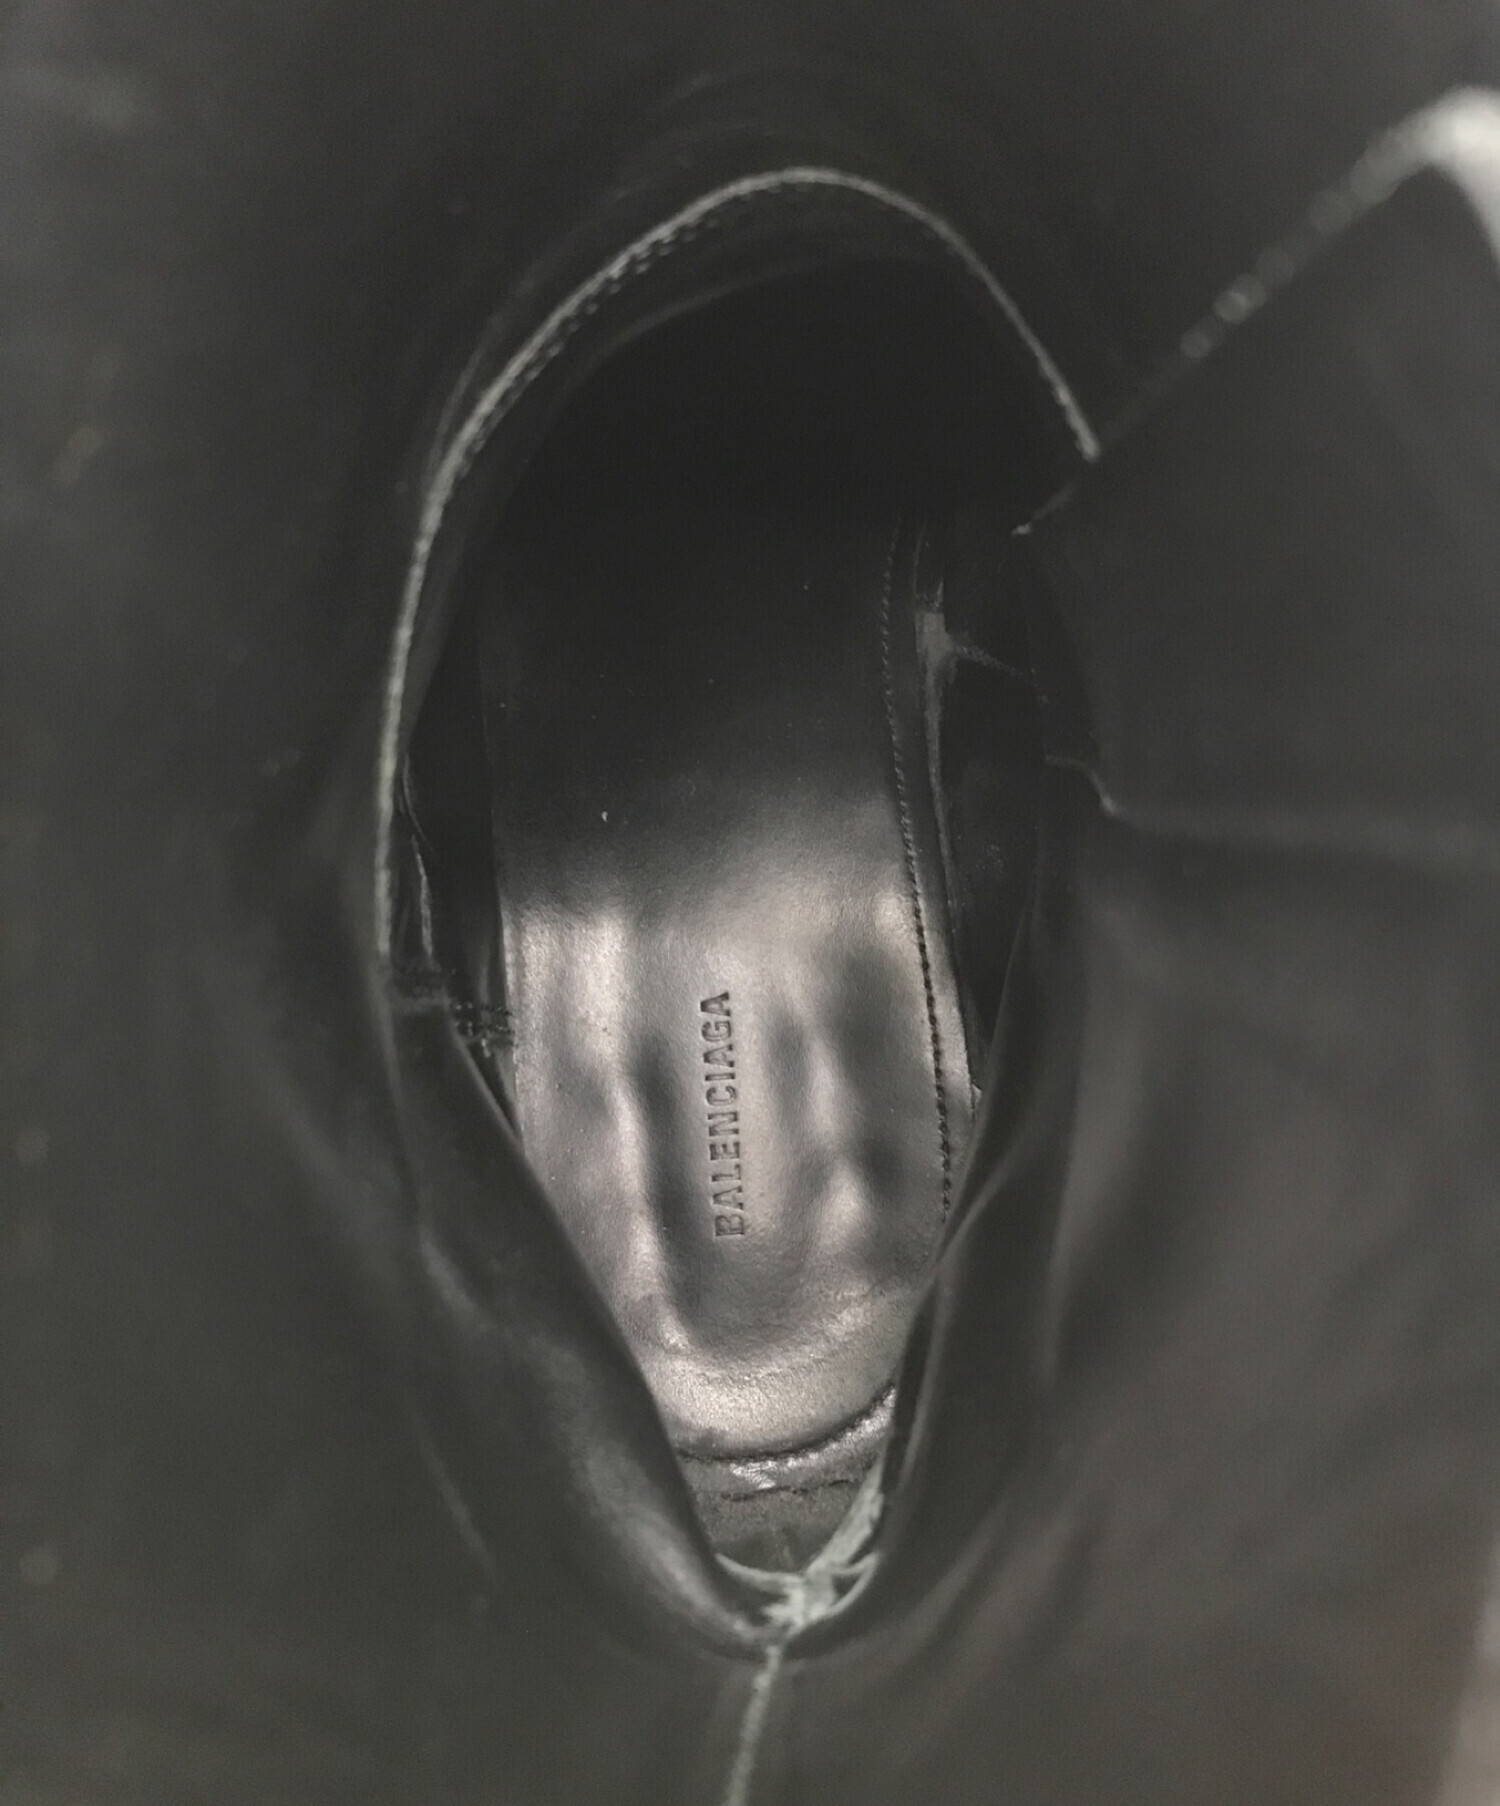 BALENCIAGA (バレンシアガ) リムブーティパテントサイドジップレザーブーツ ブラック サイズ:43 (28.5cm相当)